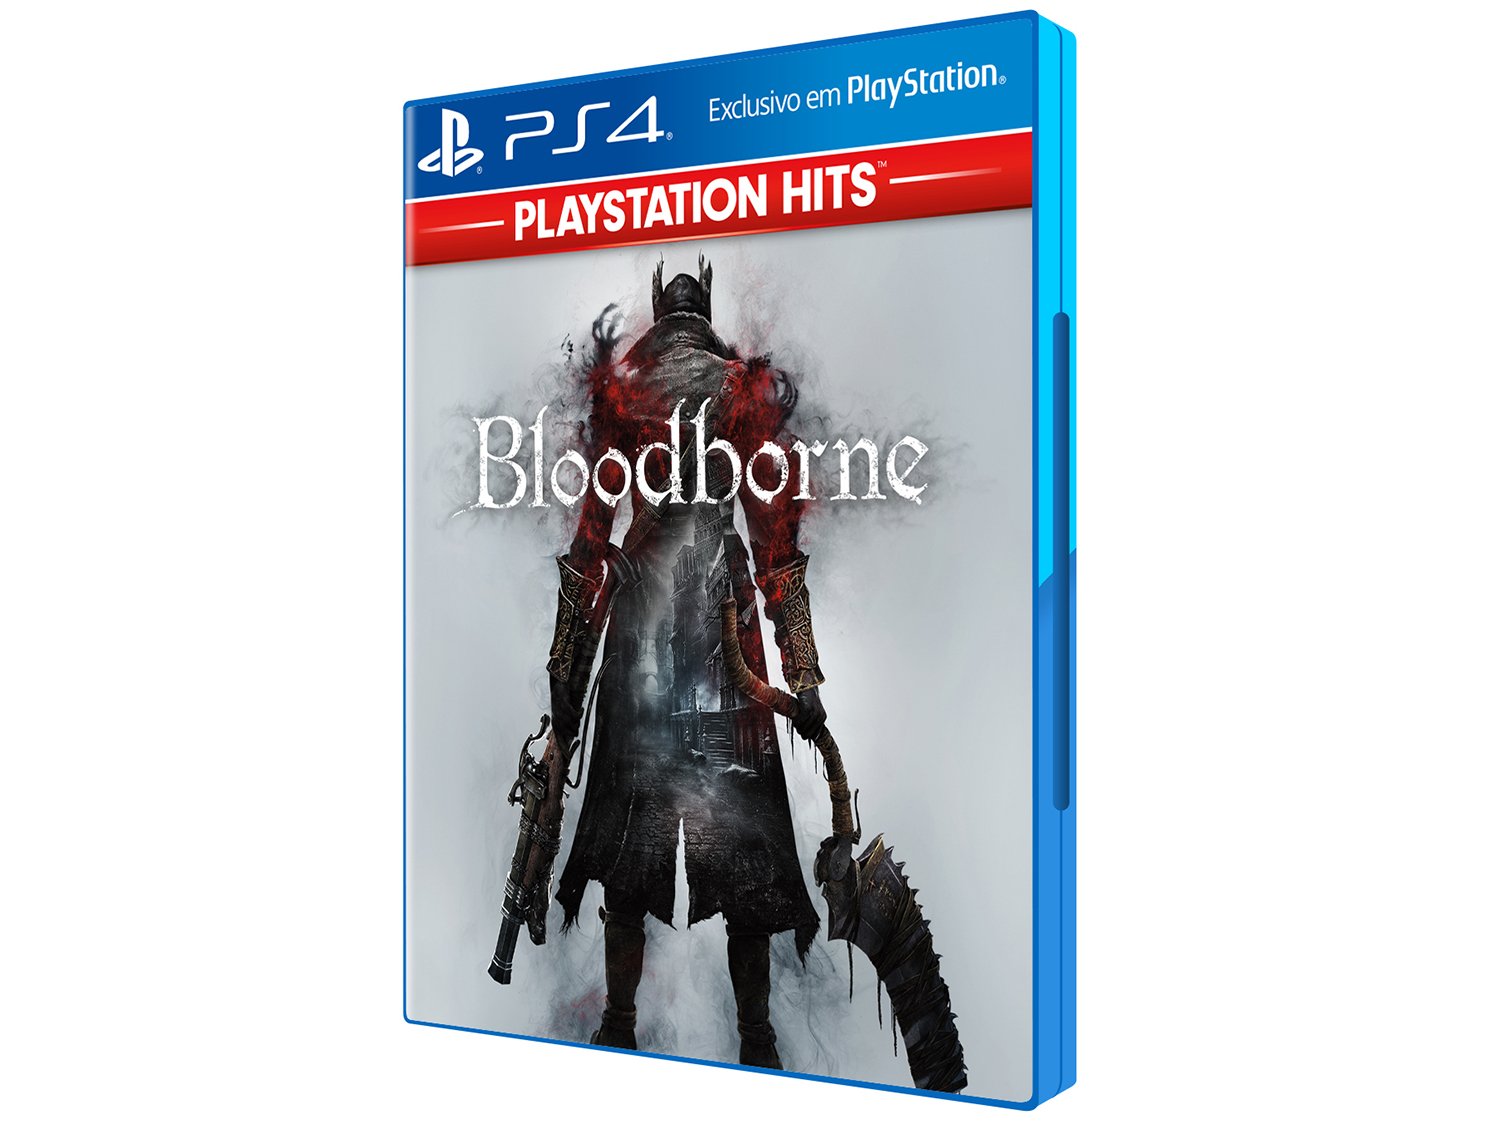 Jogo Bloodborne - Playstation Hits - PS4